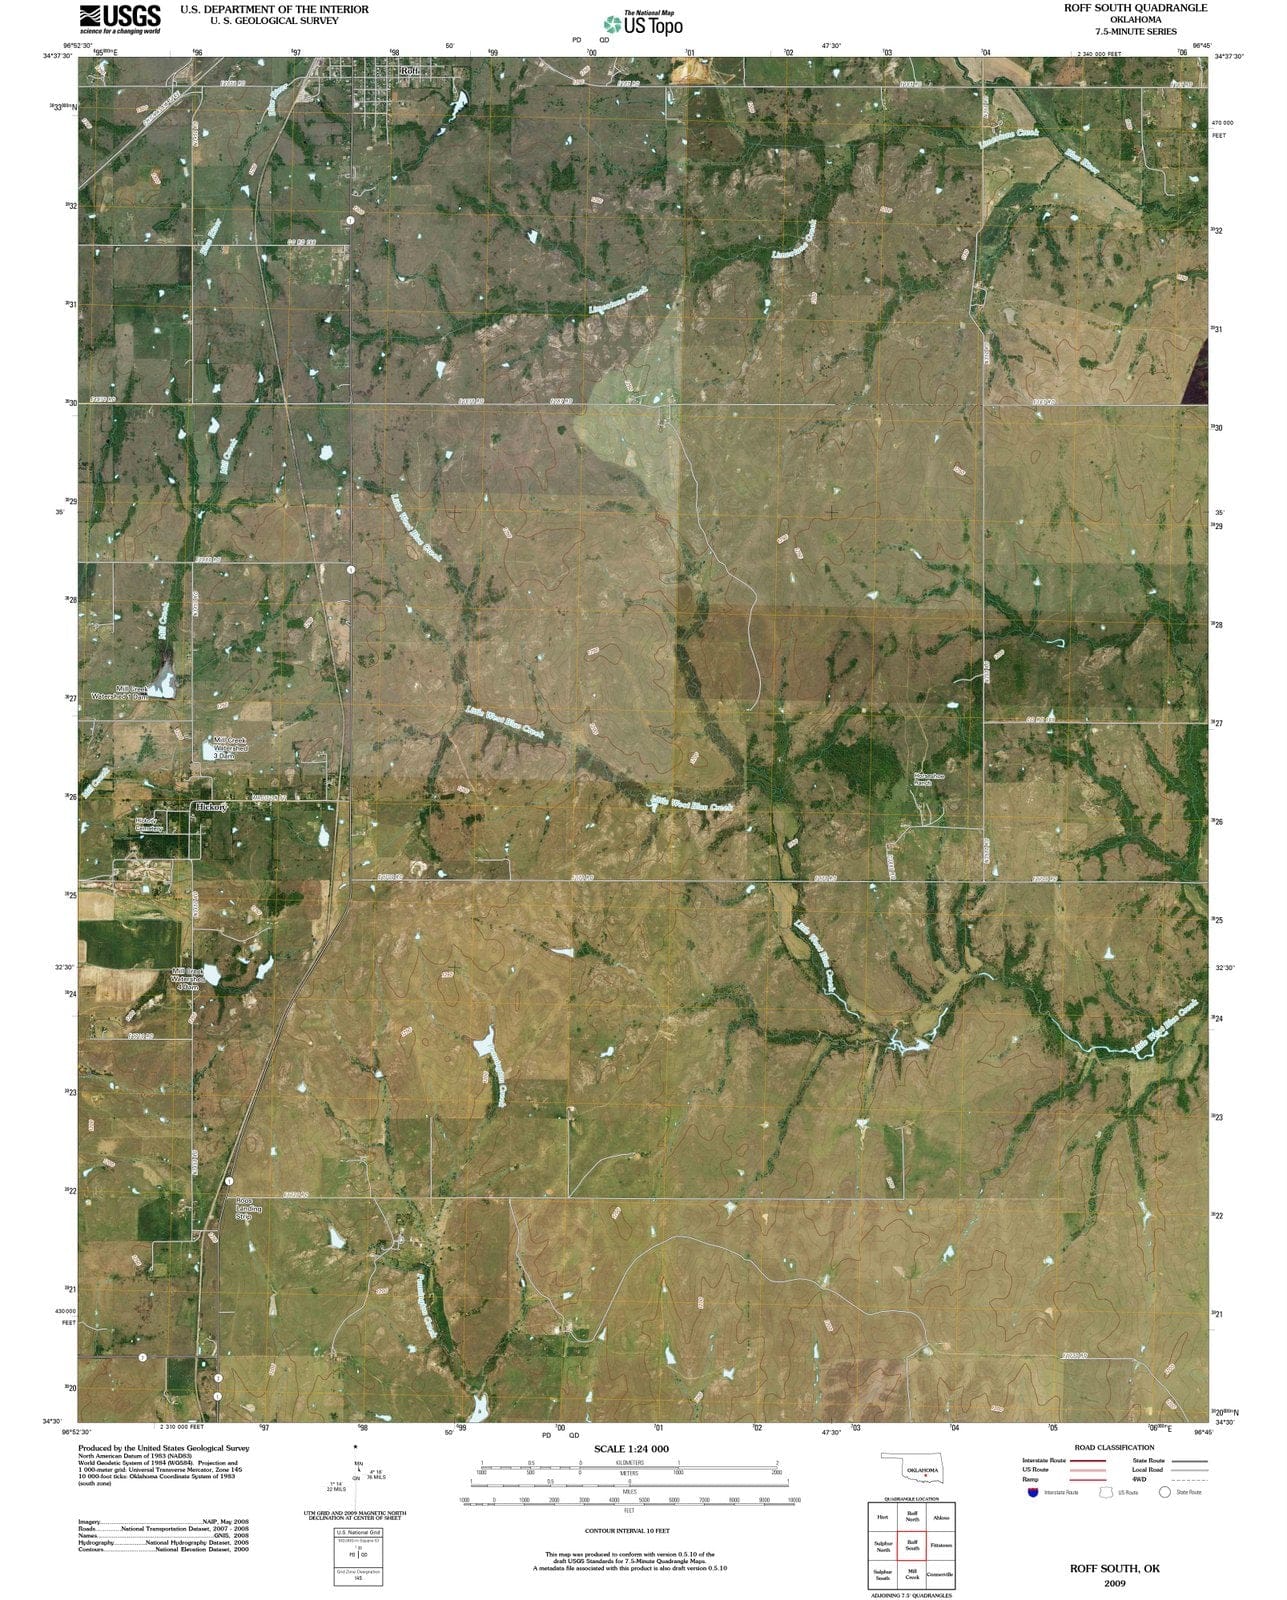 2009 Roff South, OK - Oklahoma - USGS Topographic Map